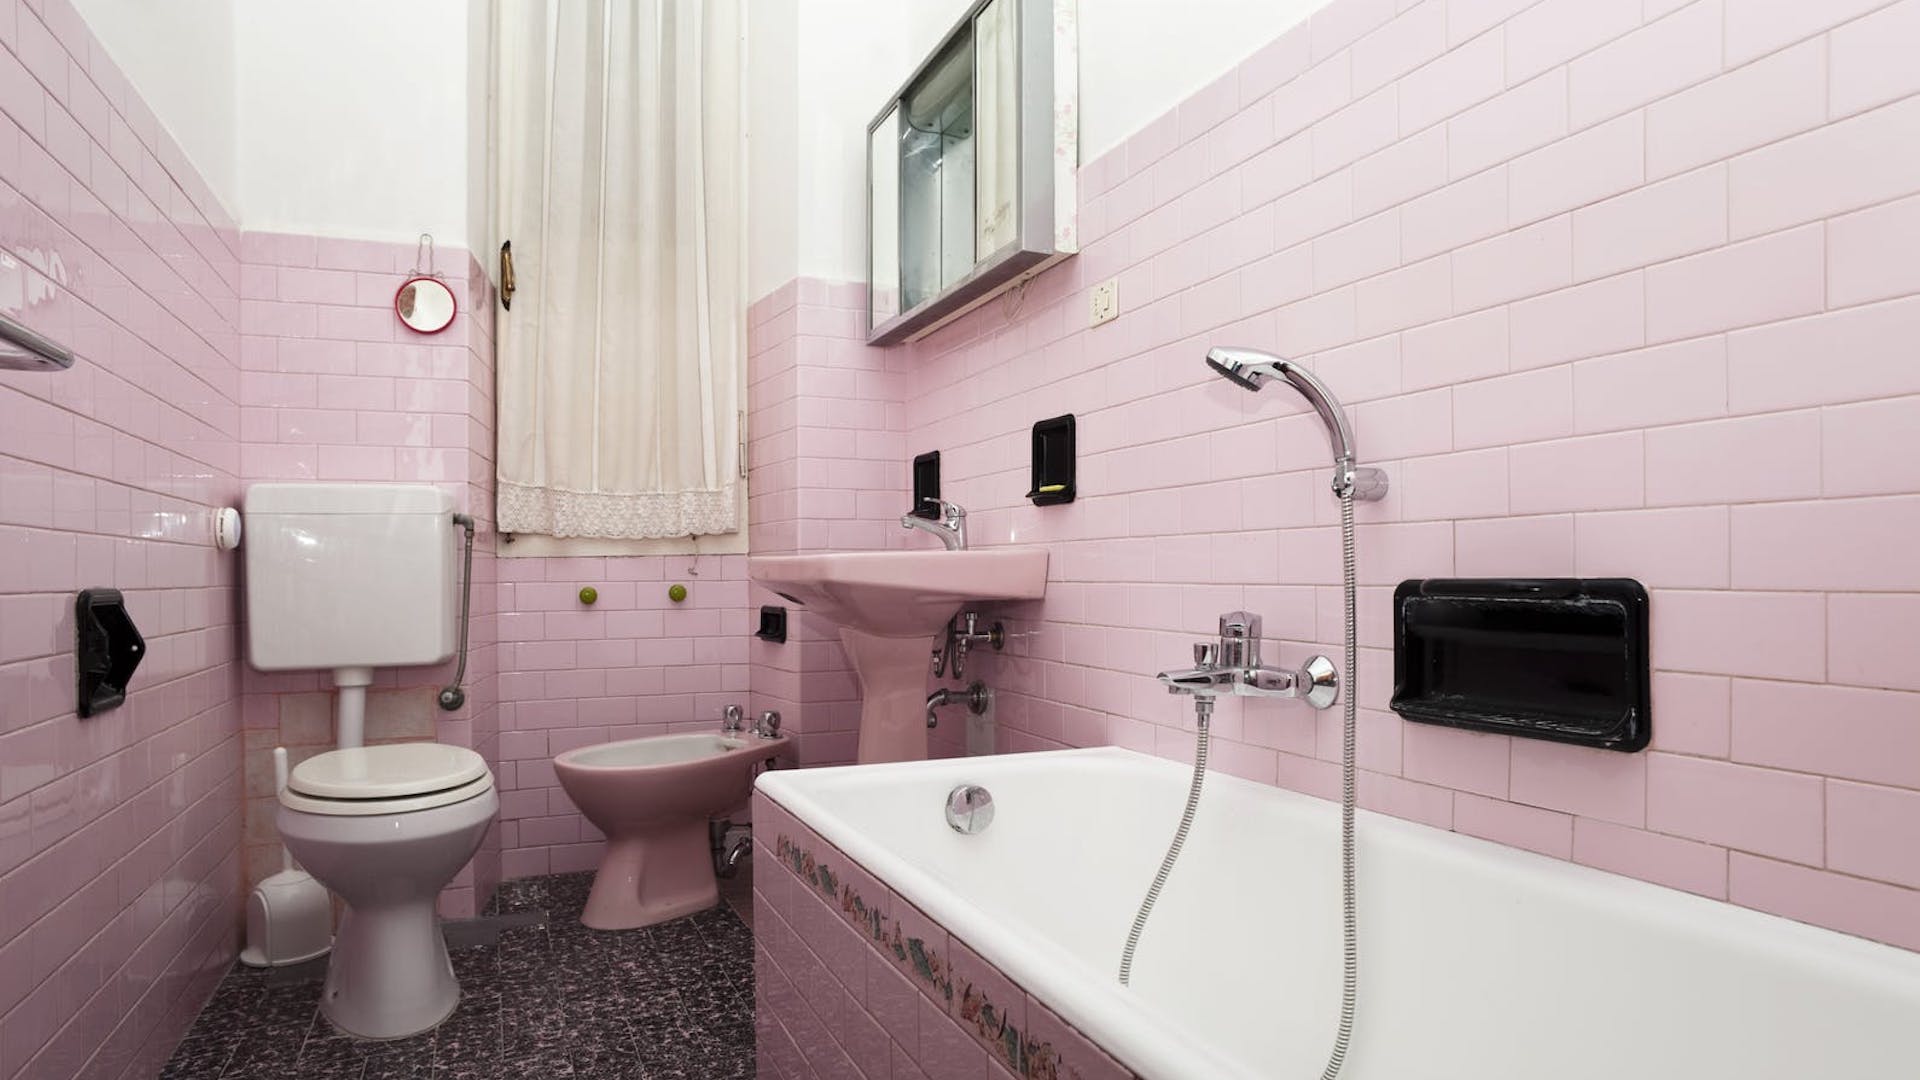 A pink bathroom